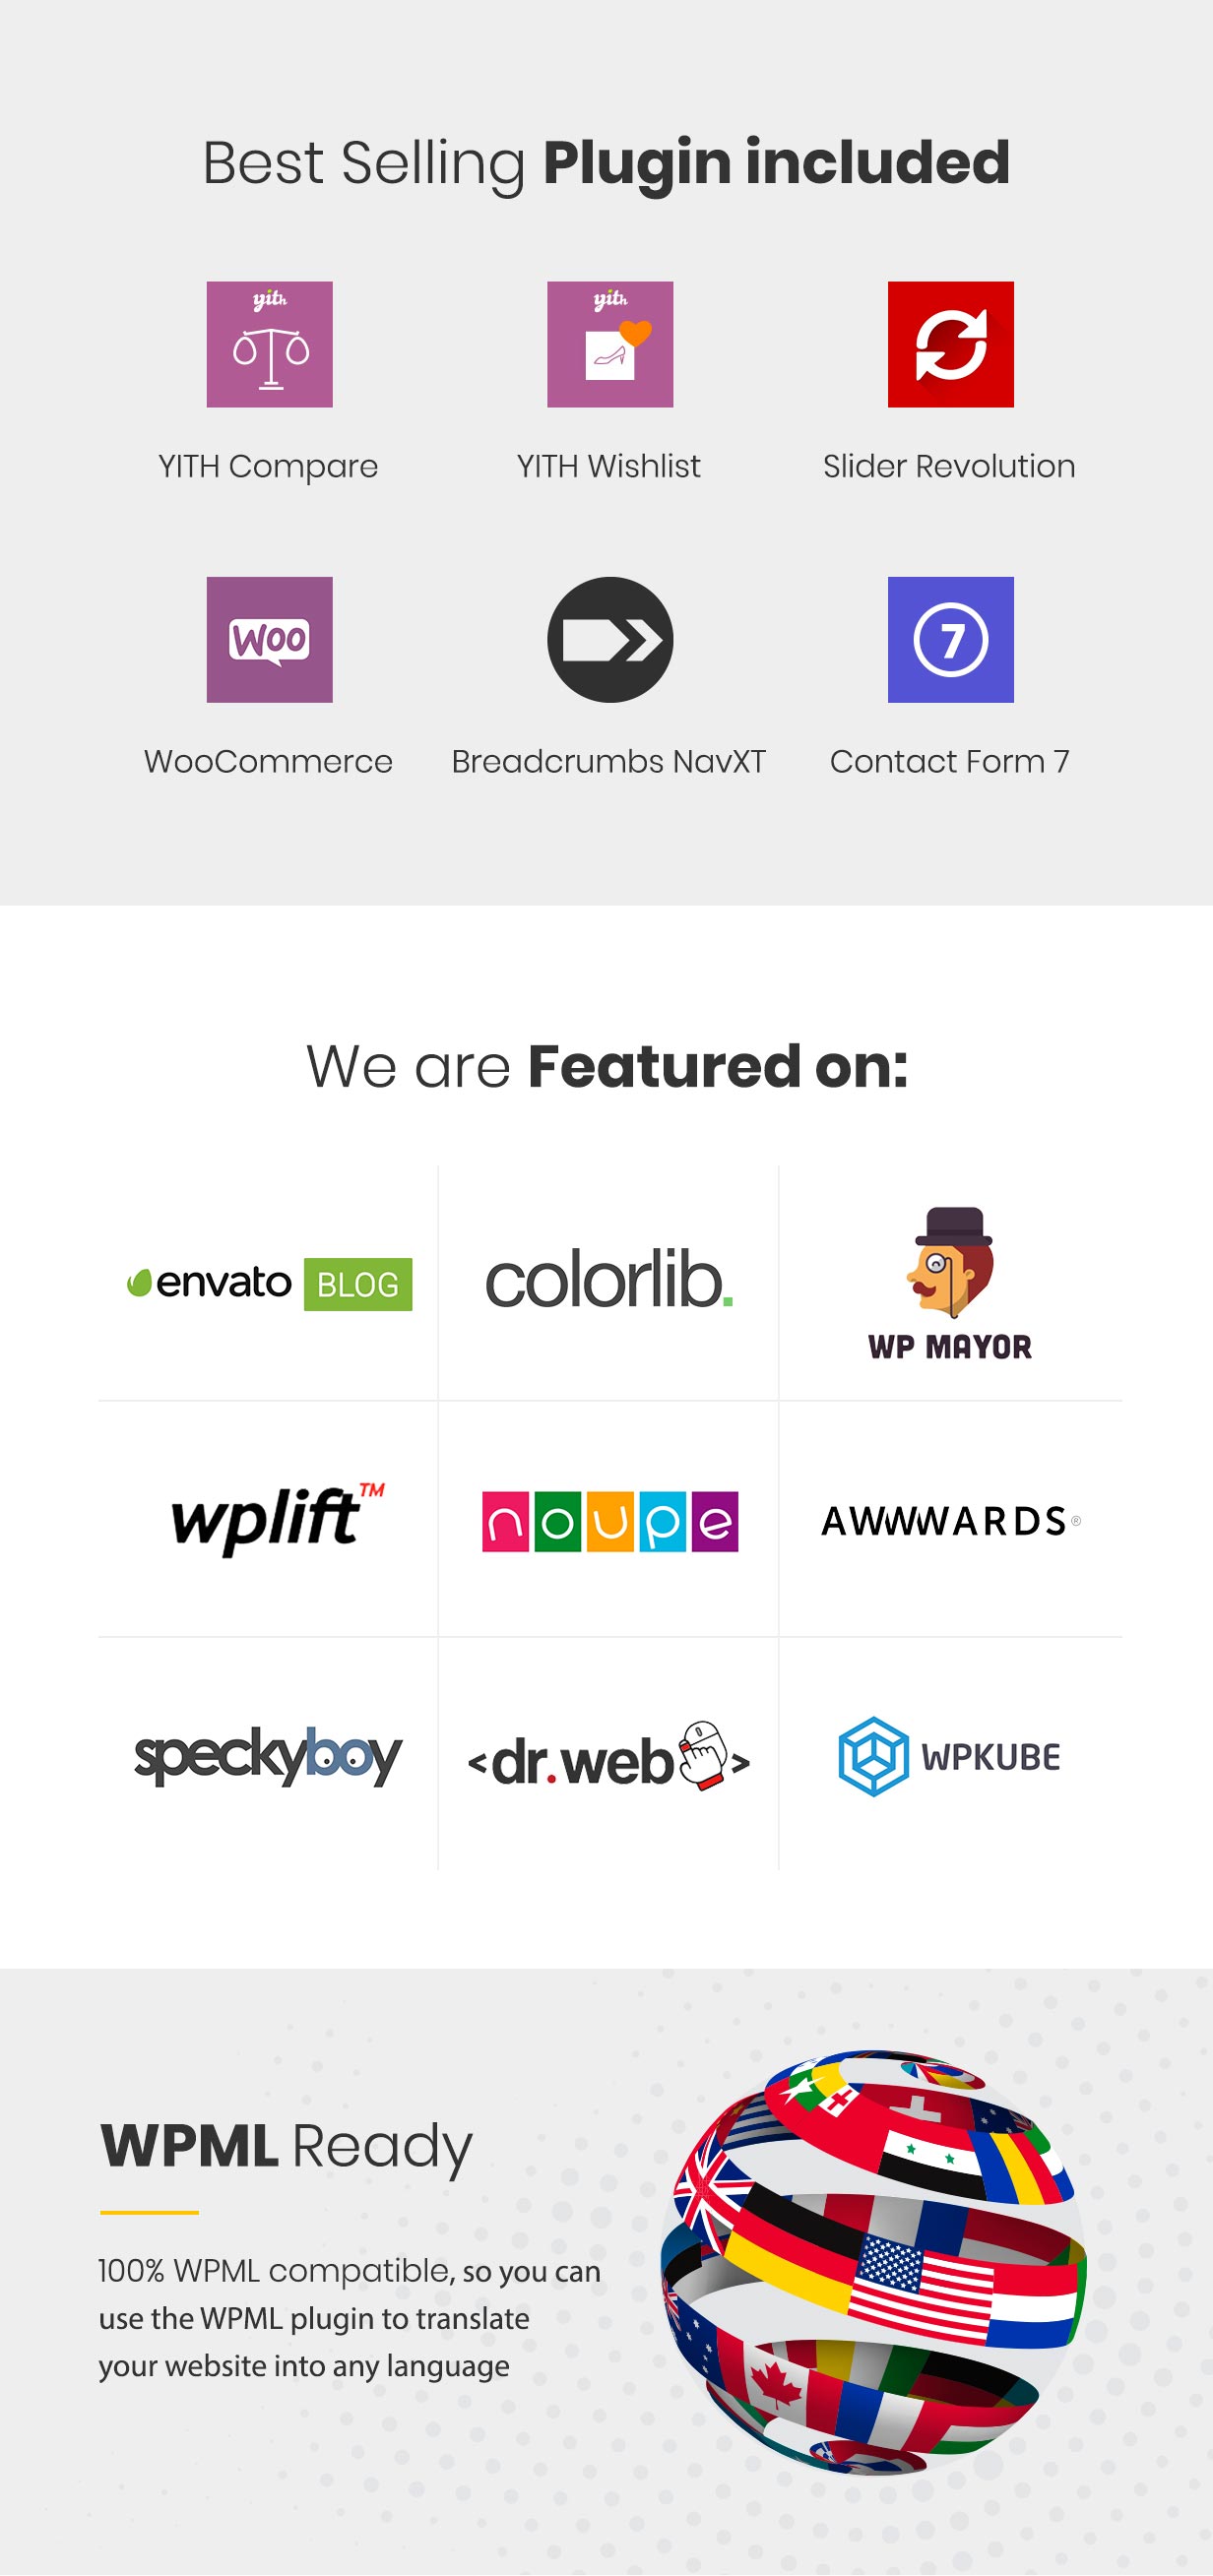 eLab Multi Vendor Marketplace WordPress Theme Includes Best Selling Plugins like TIYH Compare, YITH Wishlist, Revolution Slider, WooCommerce, Breadcrumbs NavXT, Contact Form 7. Featured on Envato.Blog, Colorlib, WP Mayor, WPLift, NOUPE, Awwwards, SpeckyBoy, dr.web, WPKube.